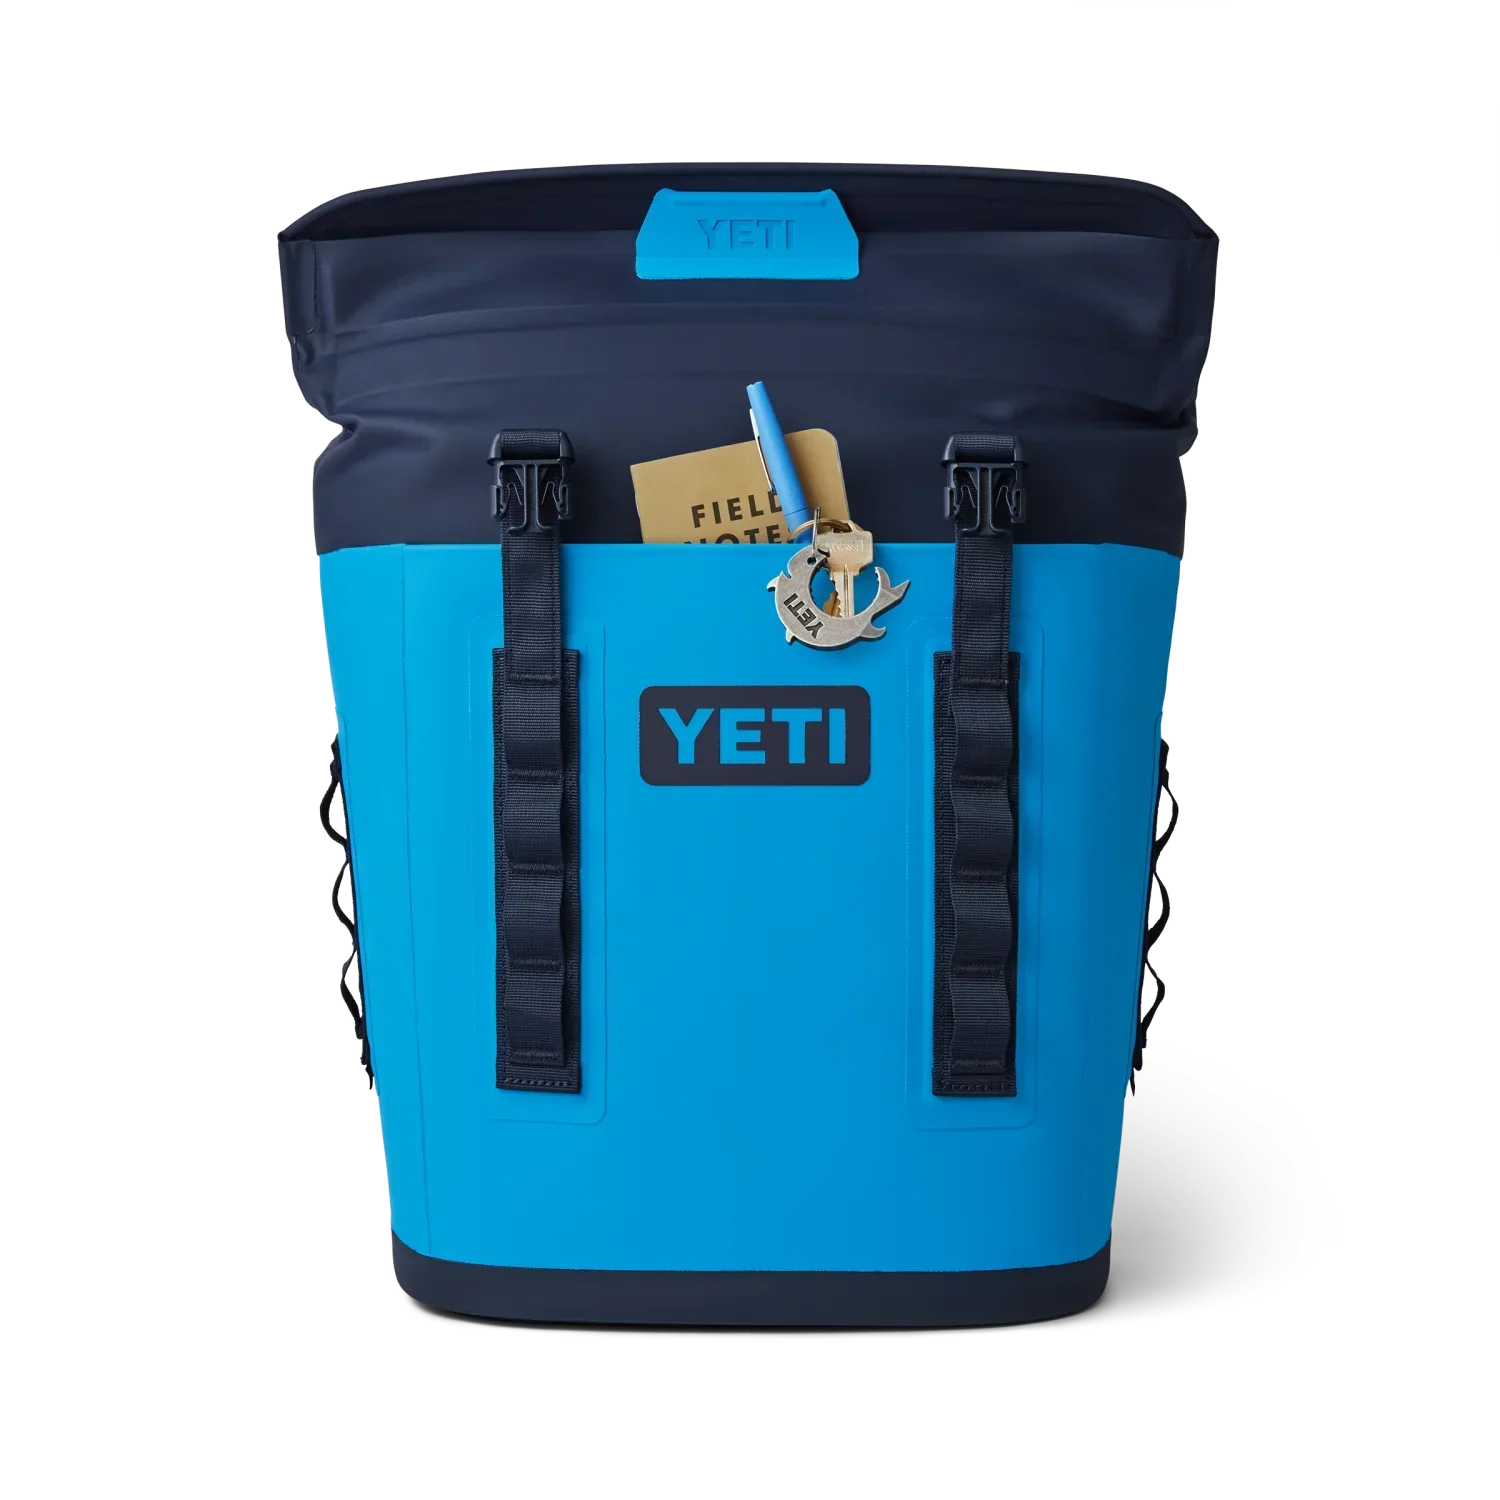 YETI HARDGOODS - COOLERS - COOLERS SOFT YETI Hopper M12 Backpack Soft Cooler BIG WAVE BLUE|NAVY